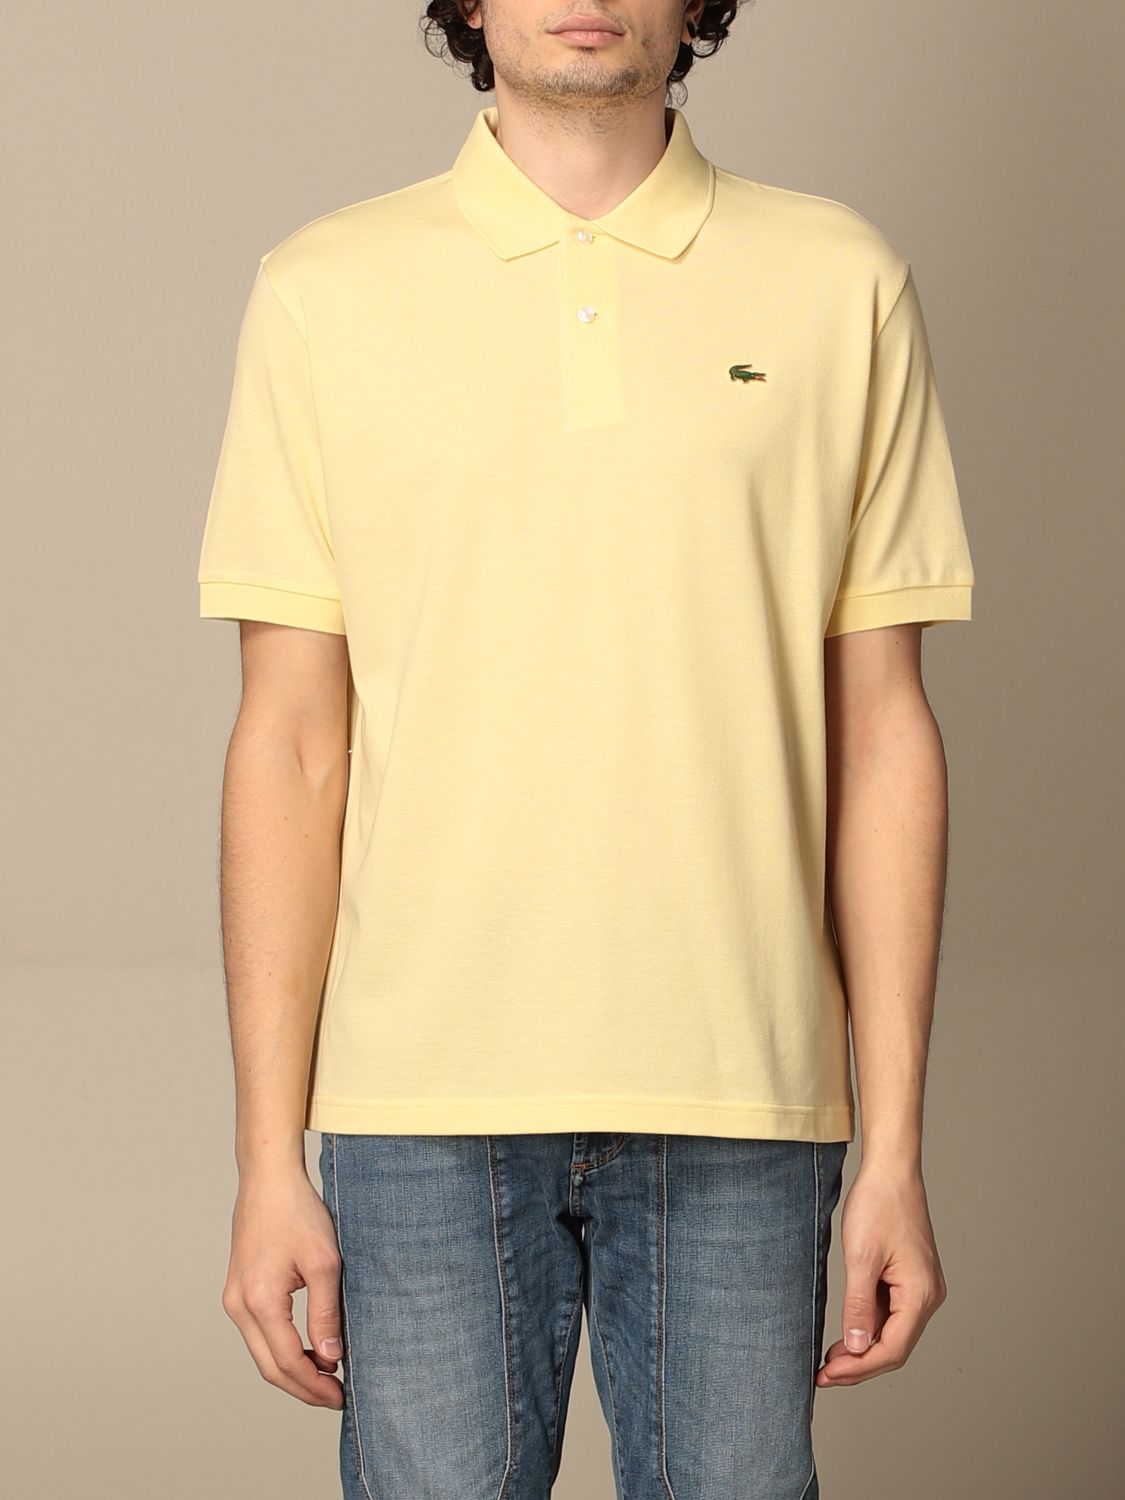 lacoste yellow shirt